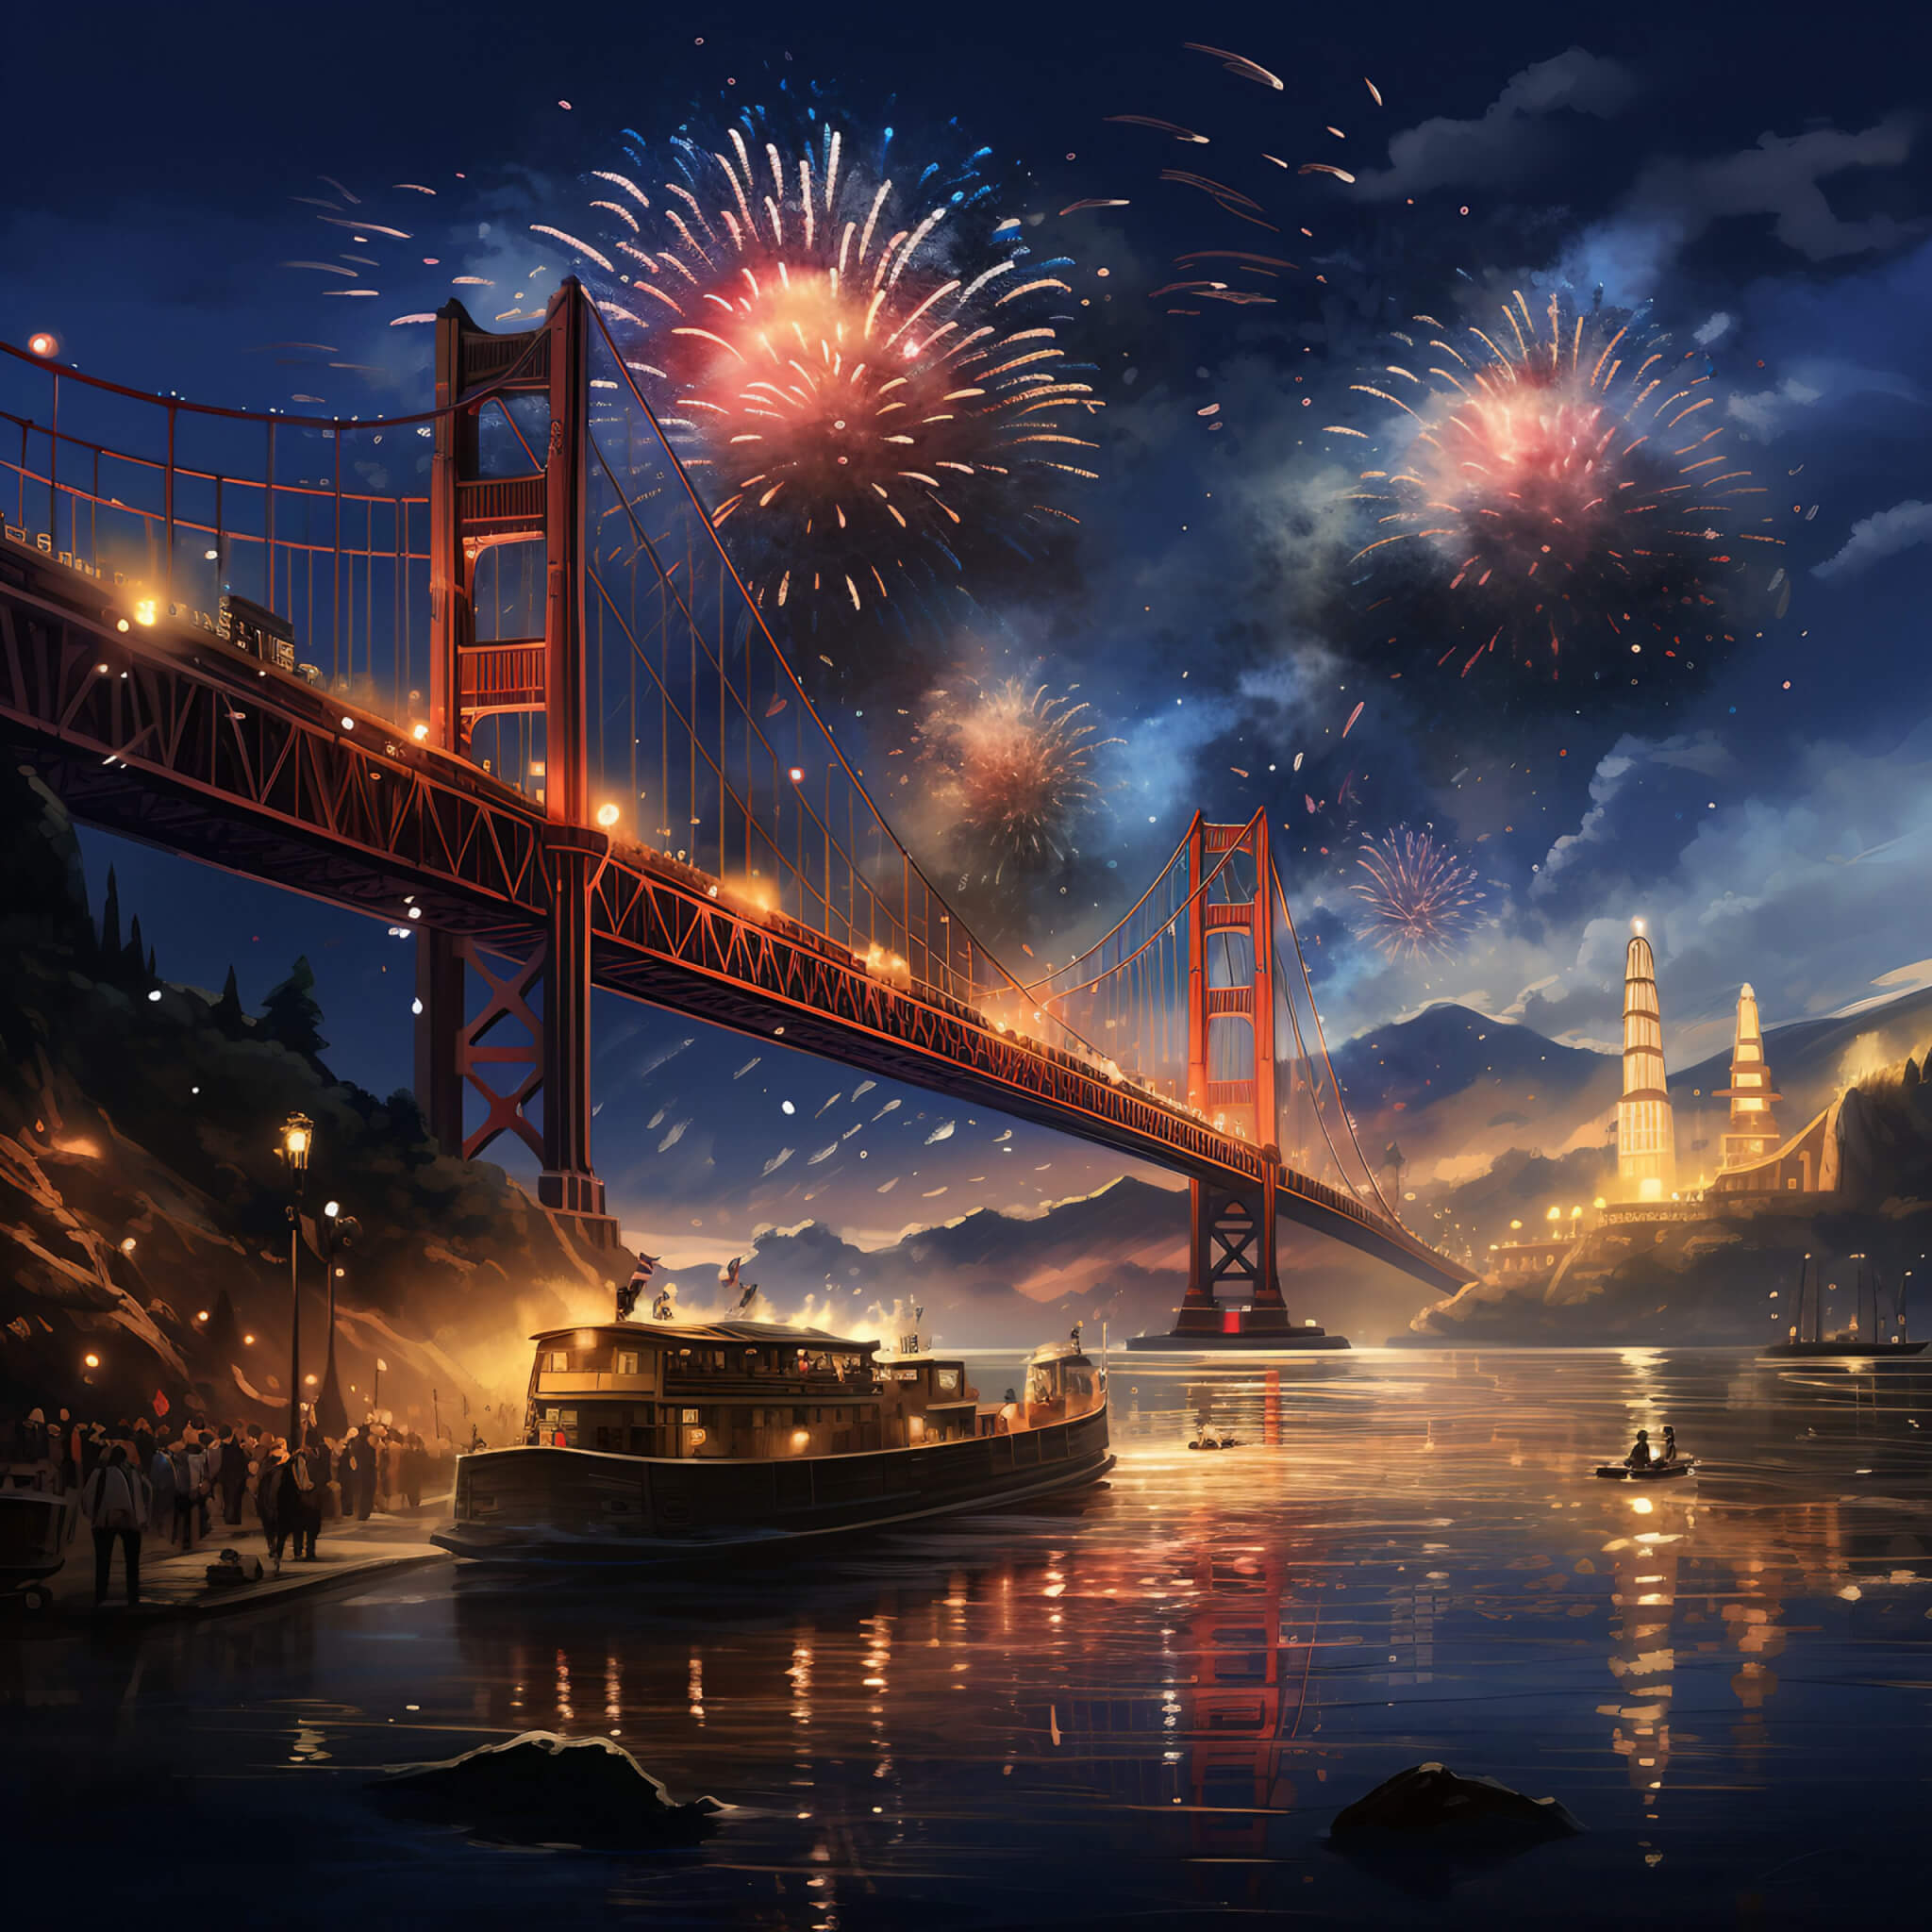 New Year's Eve Spectacular, Fireworks Illuminate the San Francisco Golden Gate Bridge � A Mesmerizing Digital Art Masterpiece